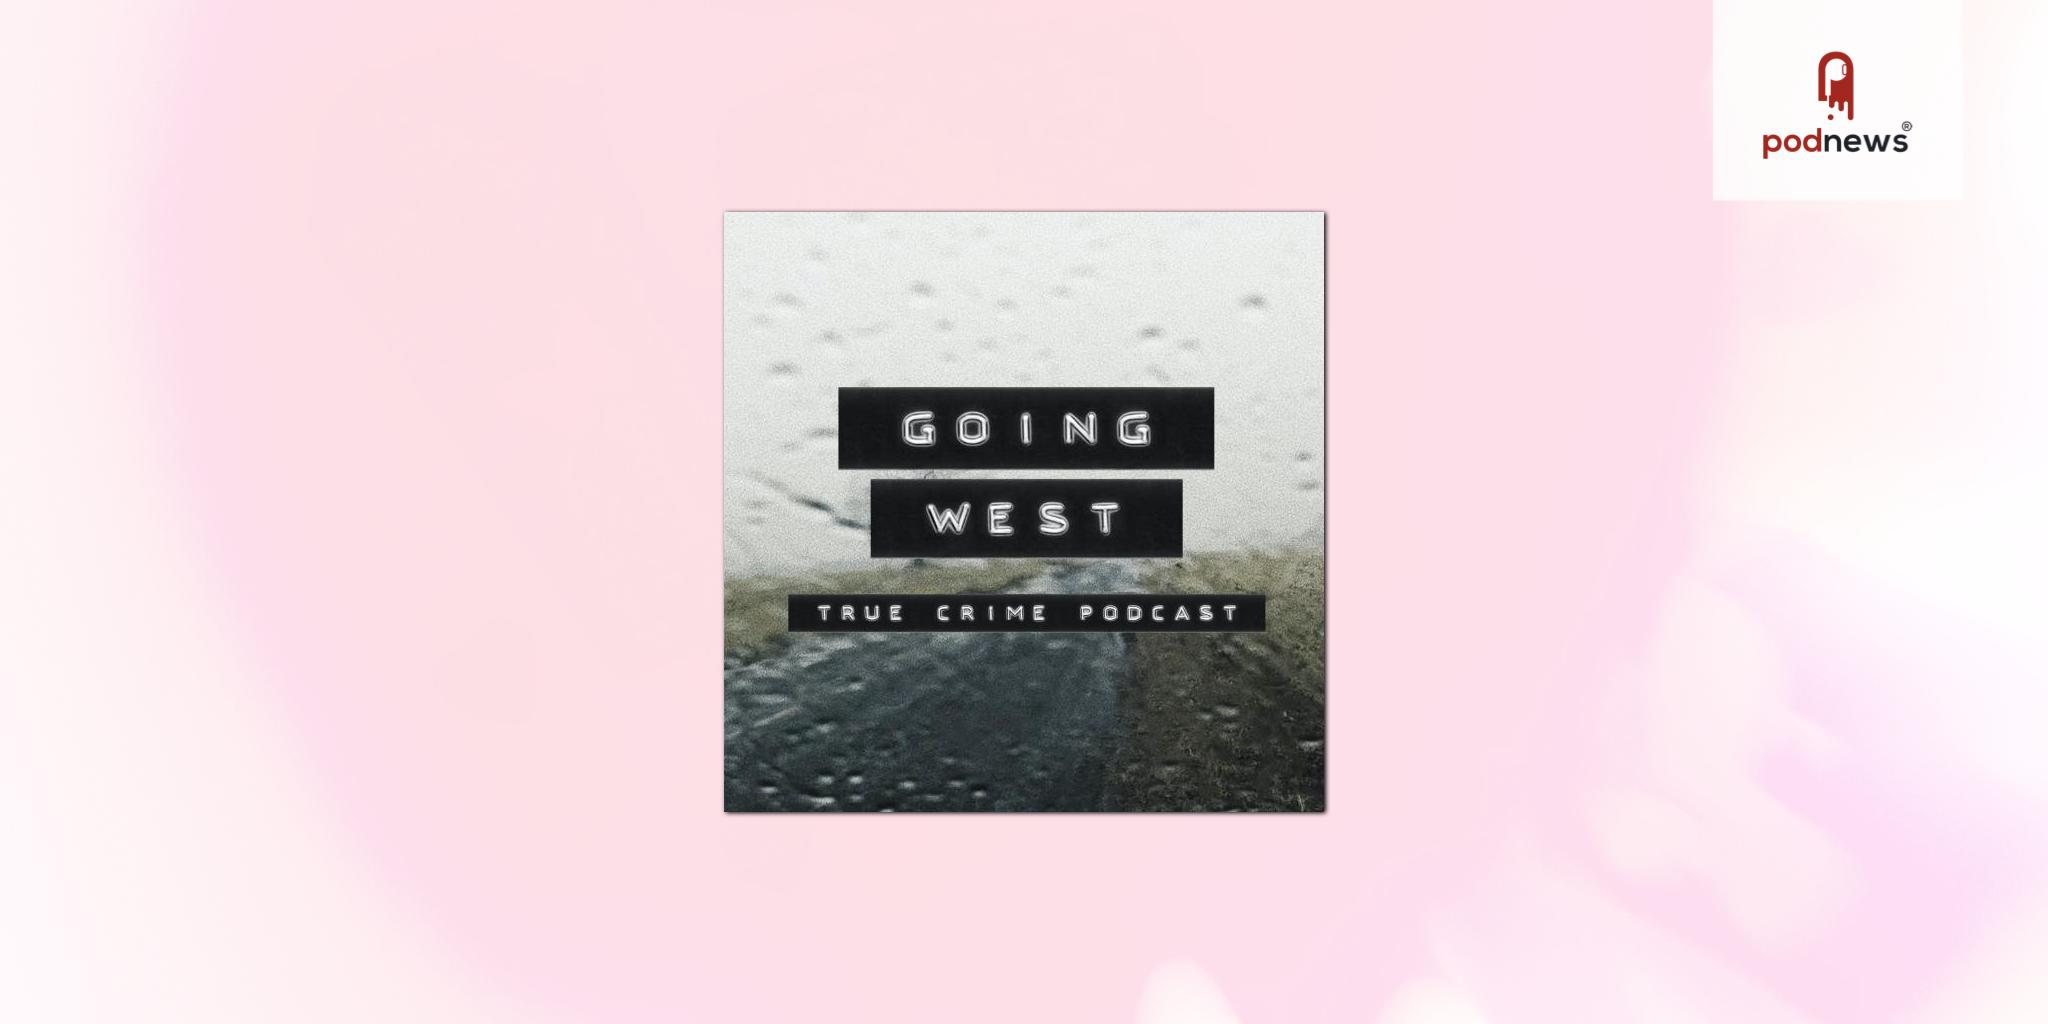 AdLarge Welcomes 'Going West' True Crime Podcast into Sales Portfolio